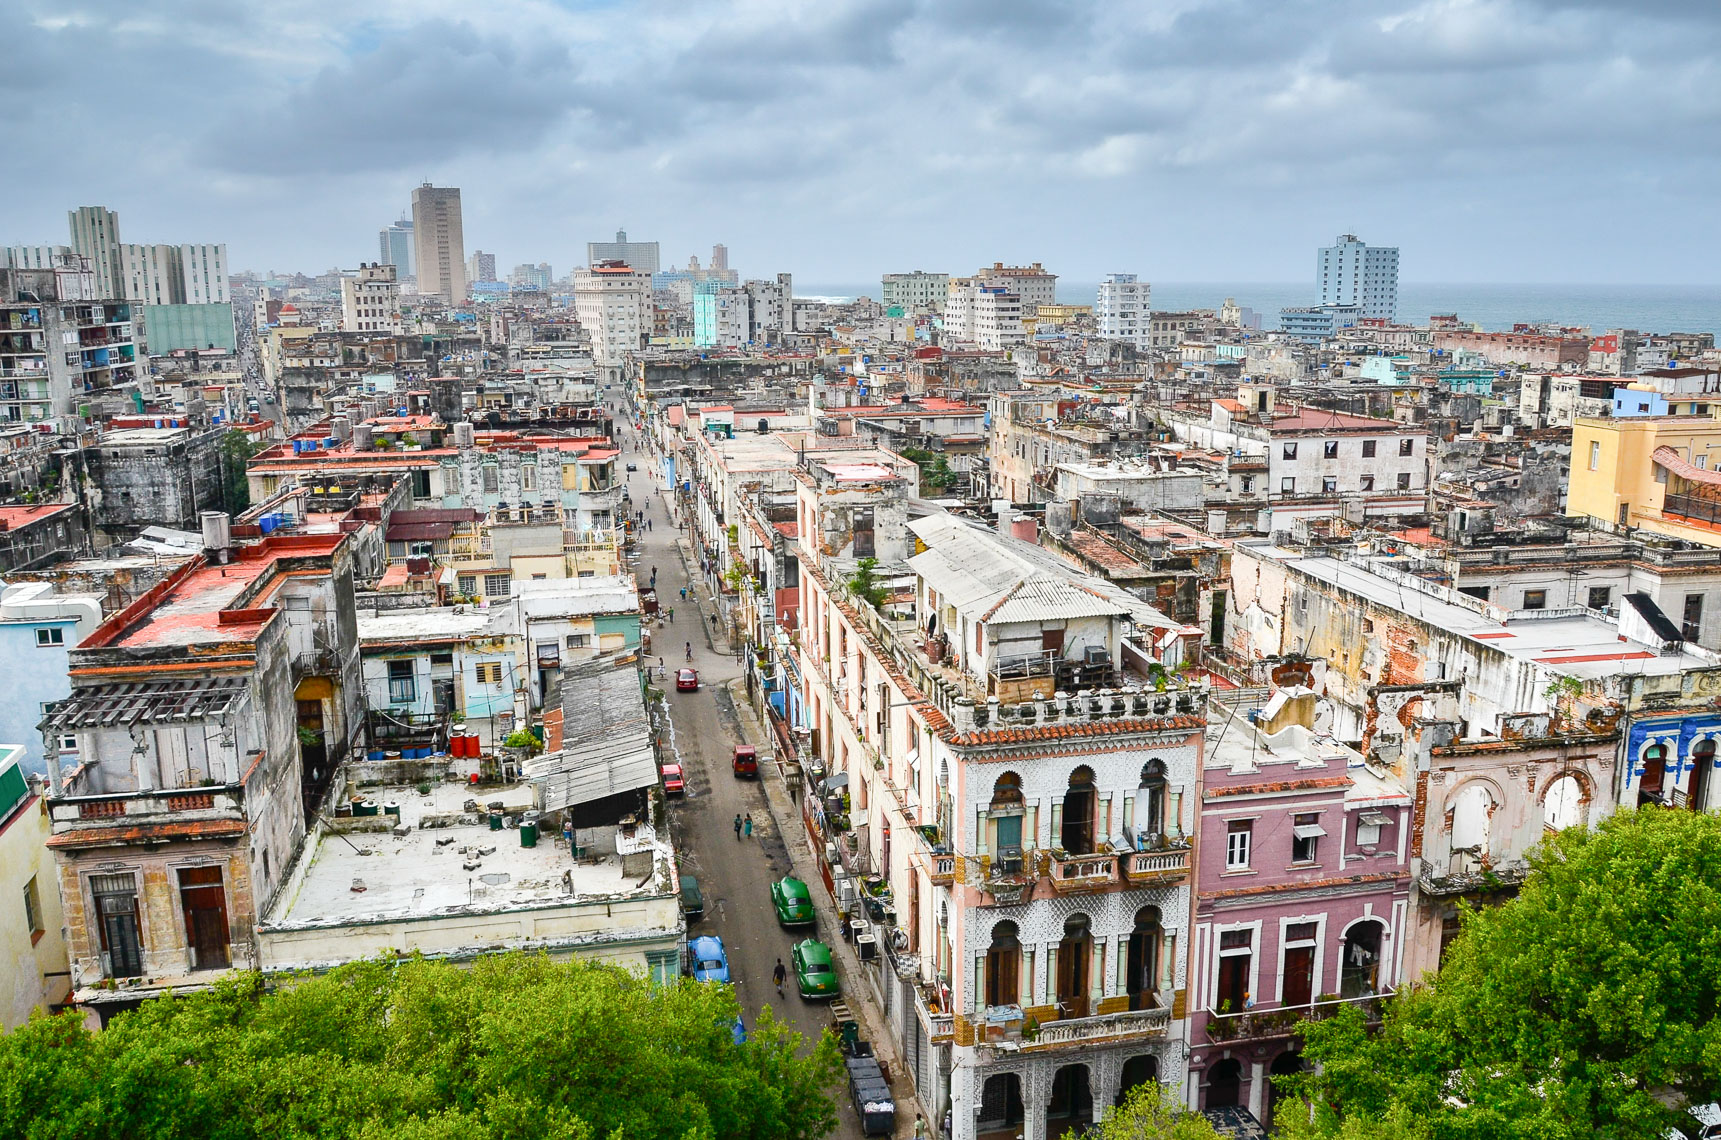 TP_1-21.  Overview of a once vibrant city.  Havana, Cuba